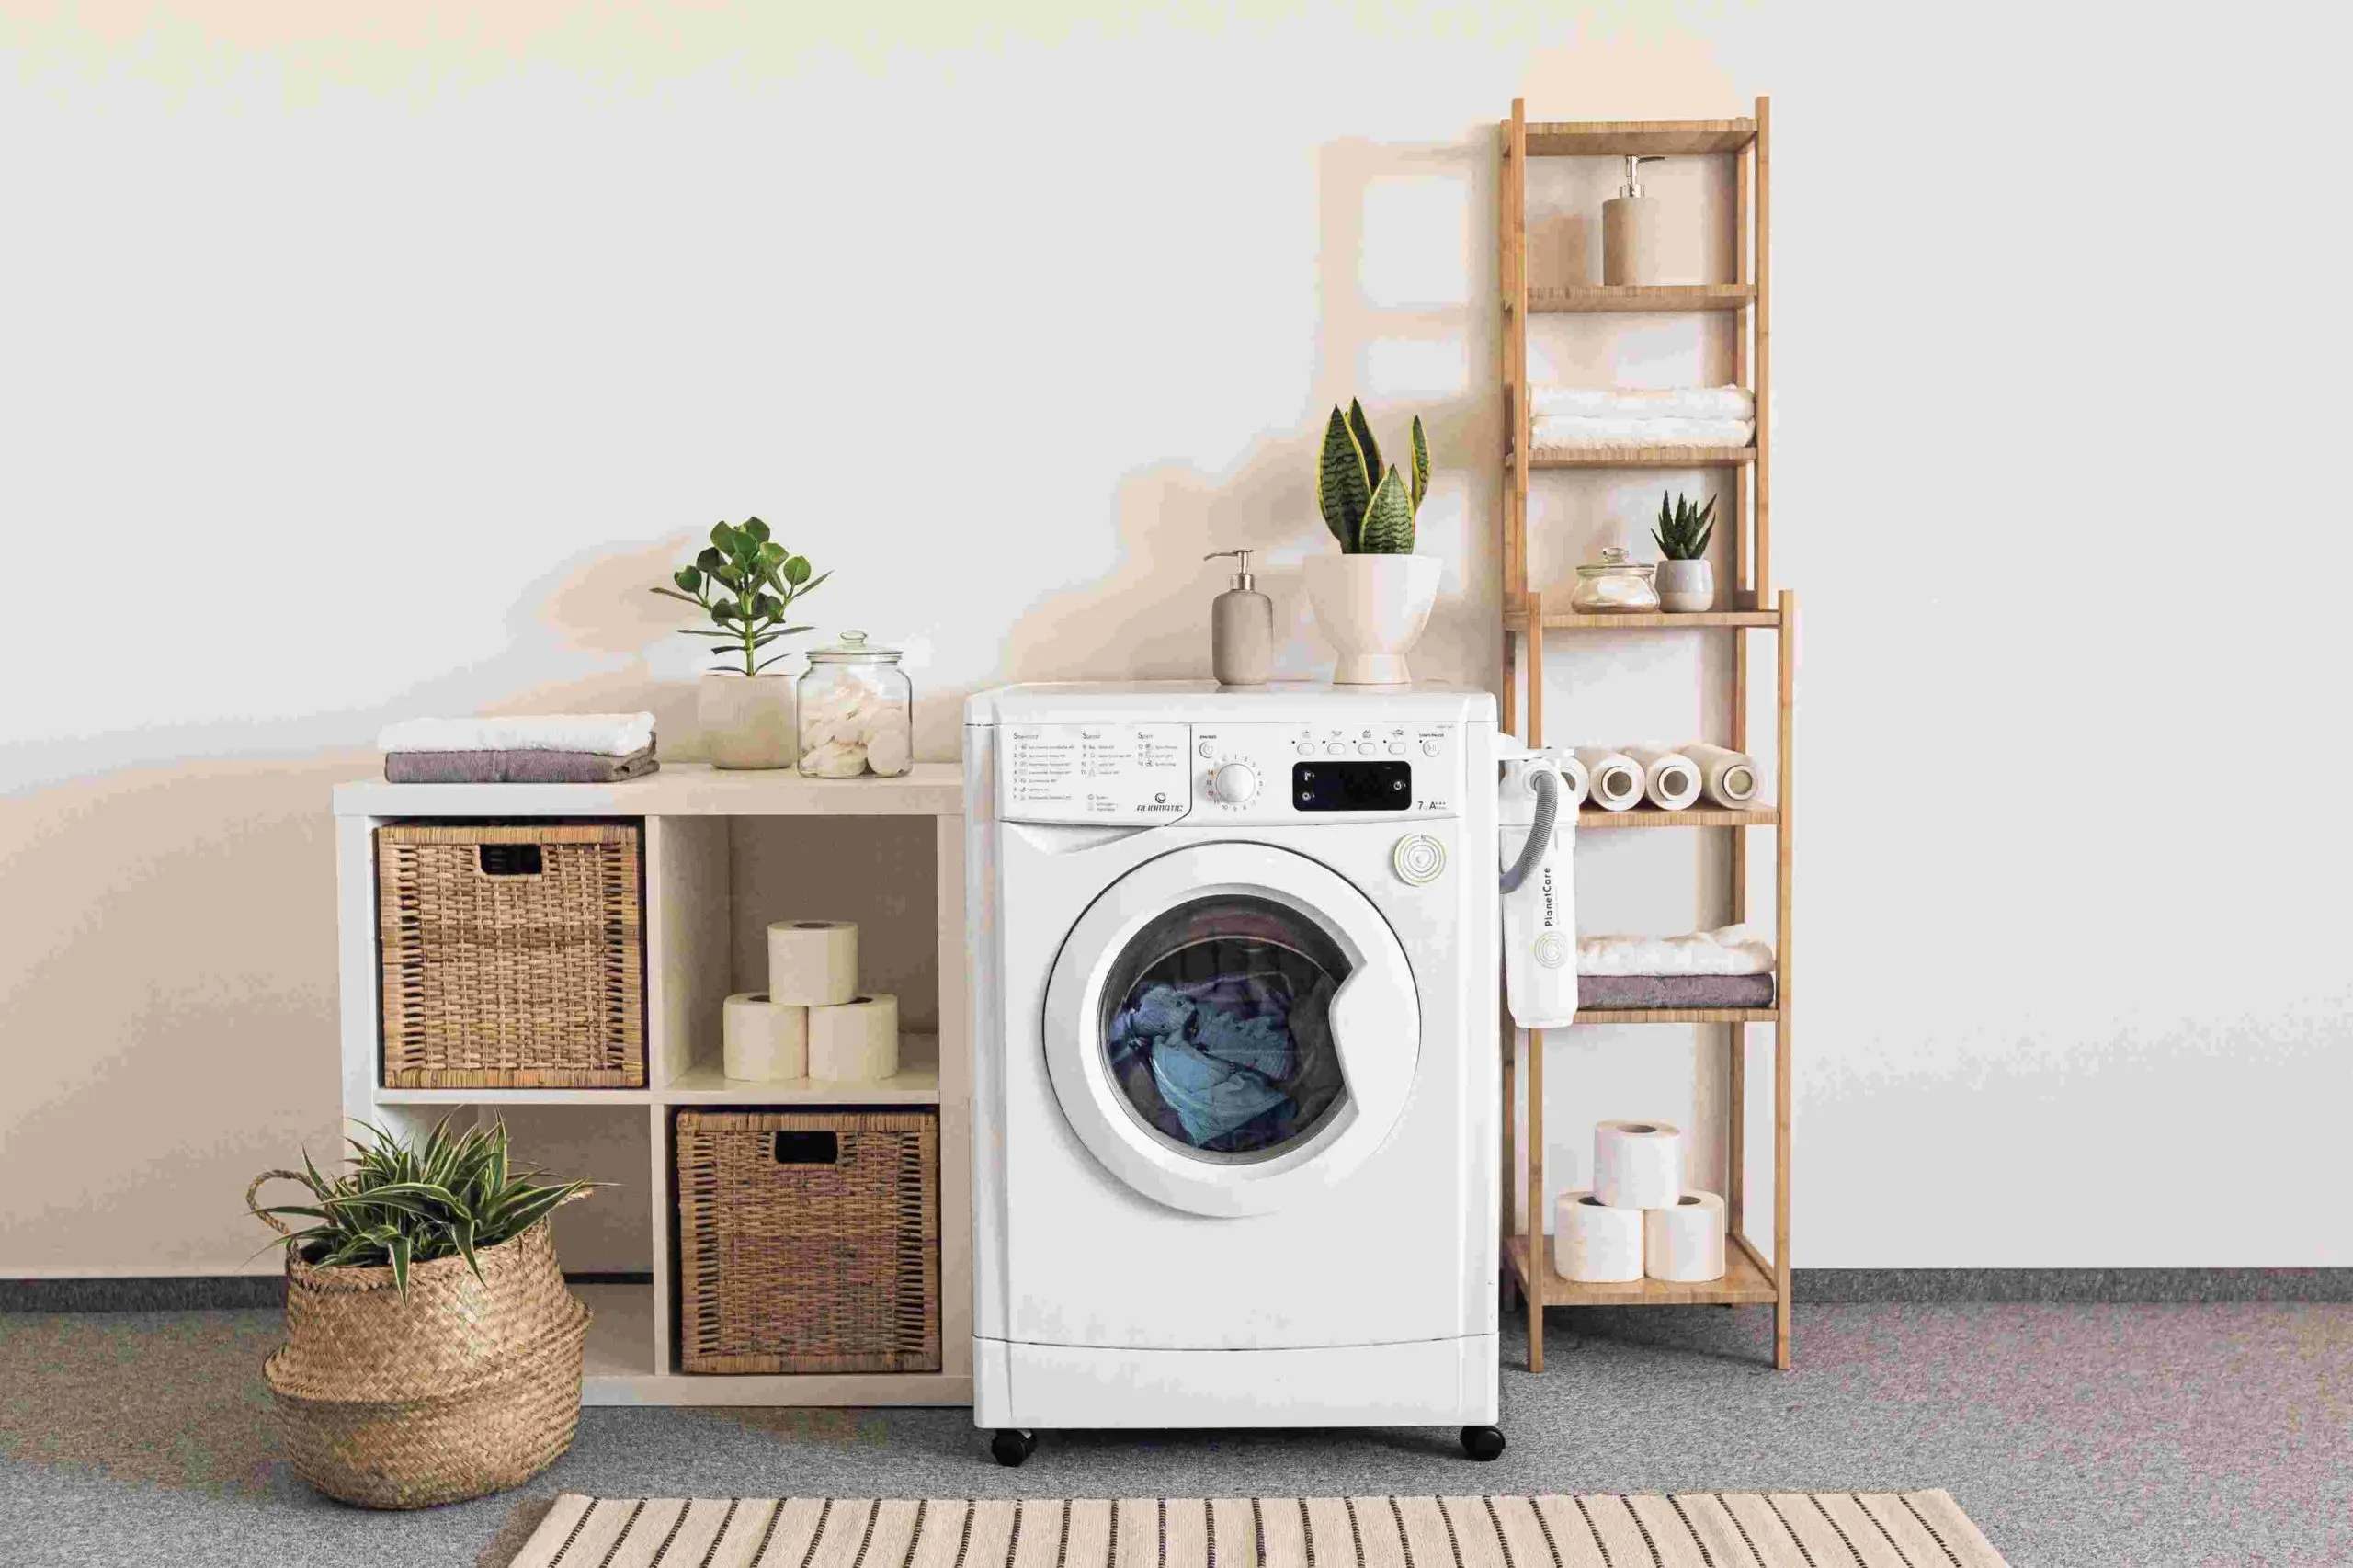 Panda Electric Portable Compact Laundry Clothes Dryer, 1.5 cu.ft